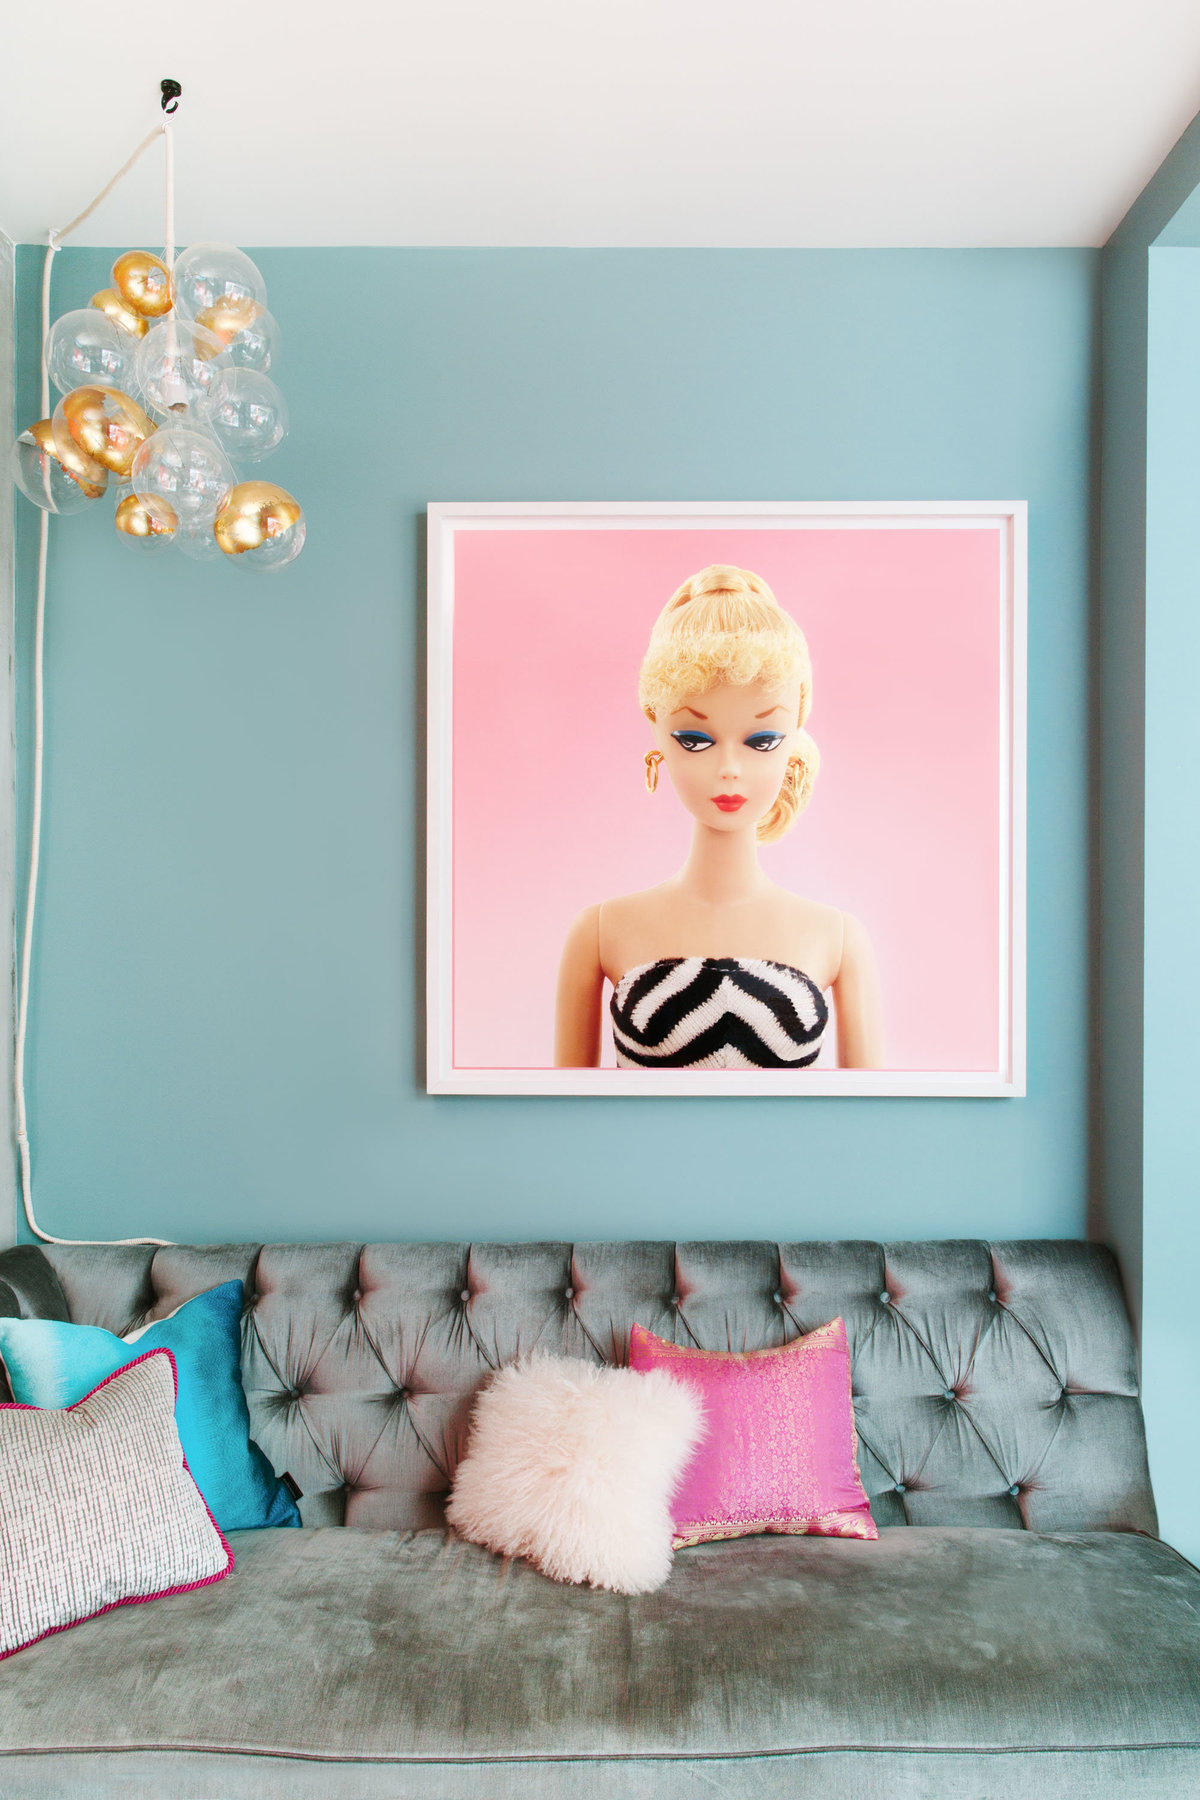 Vintage Barbie art, bubble light, and tufted sofa